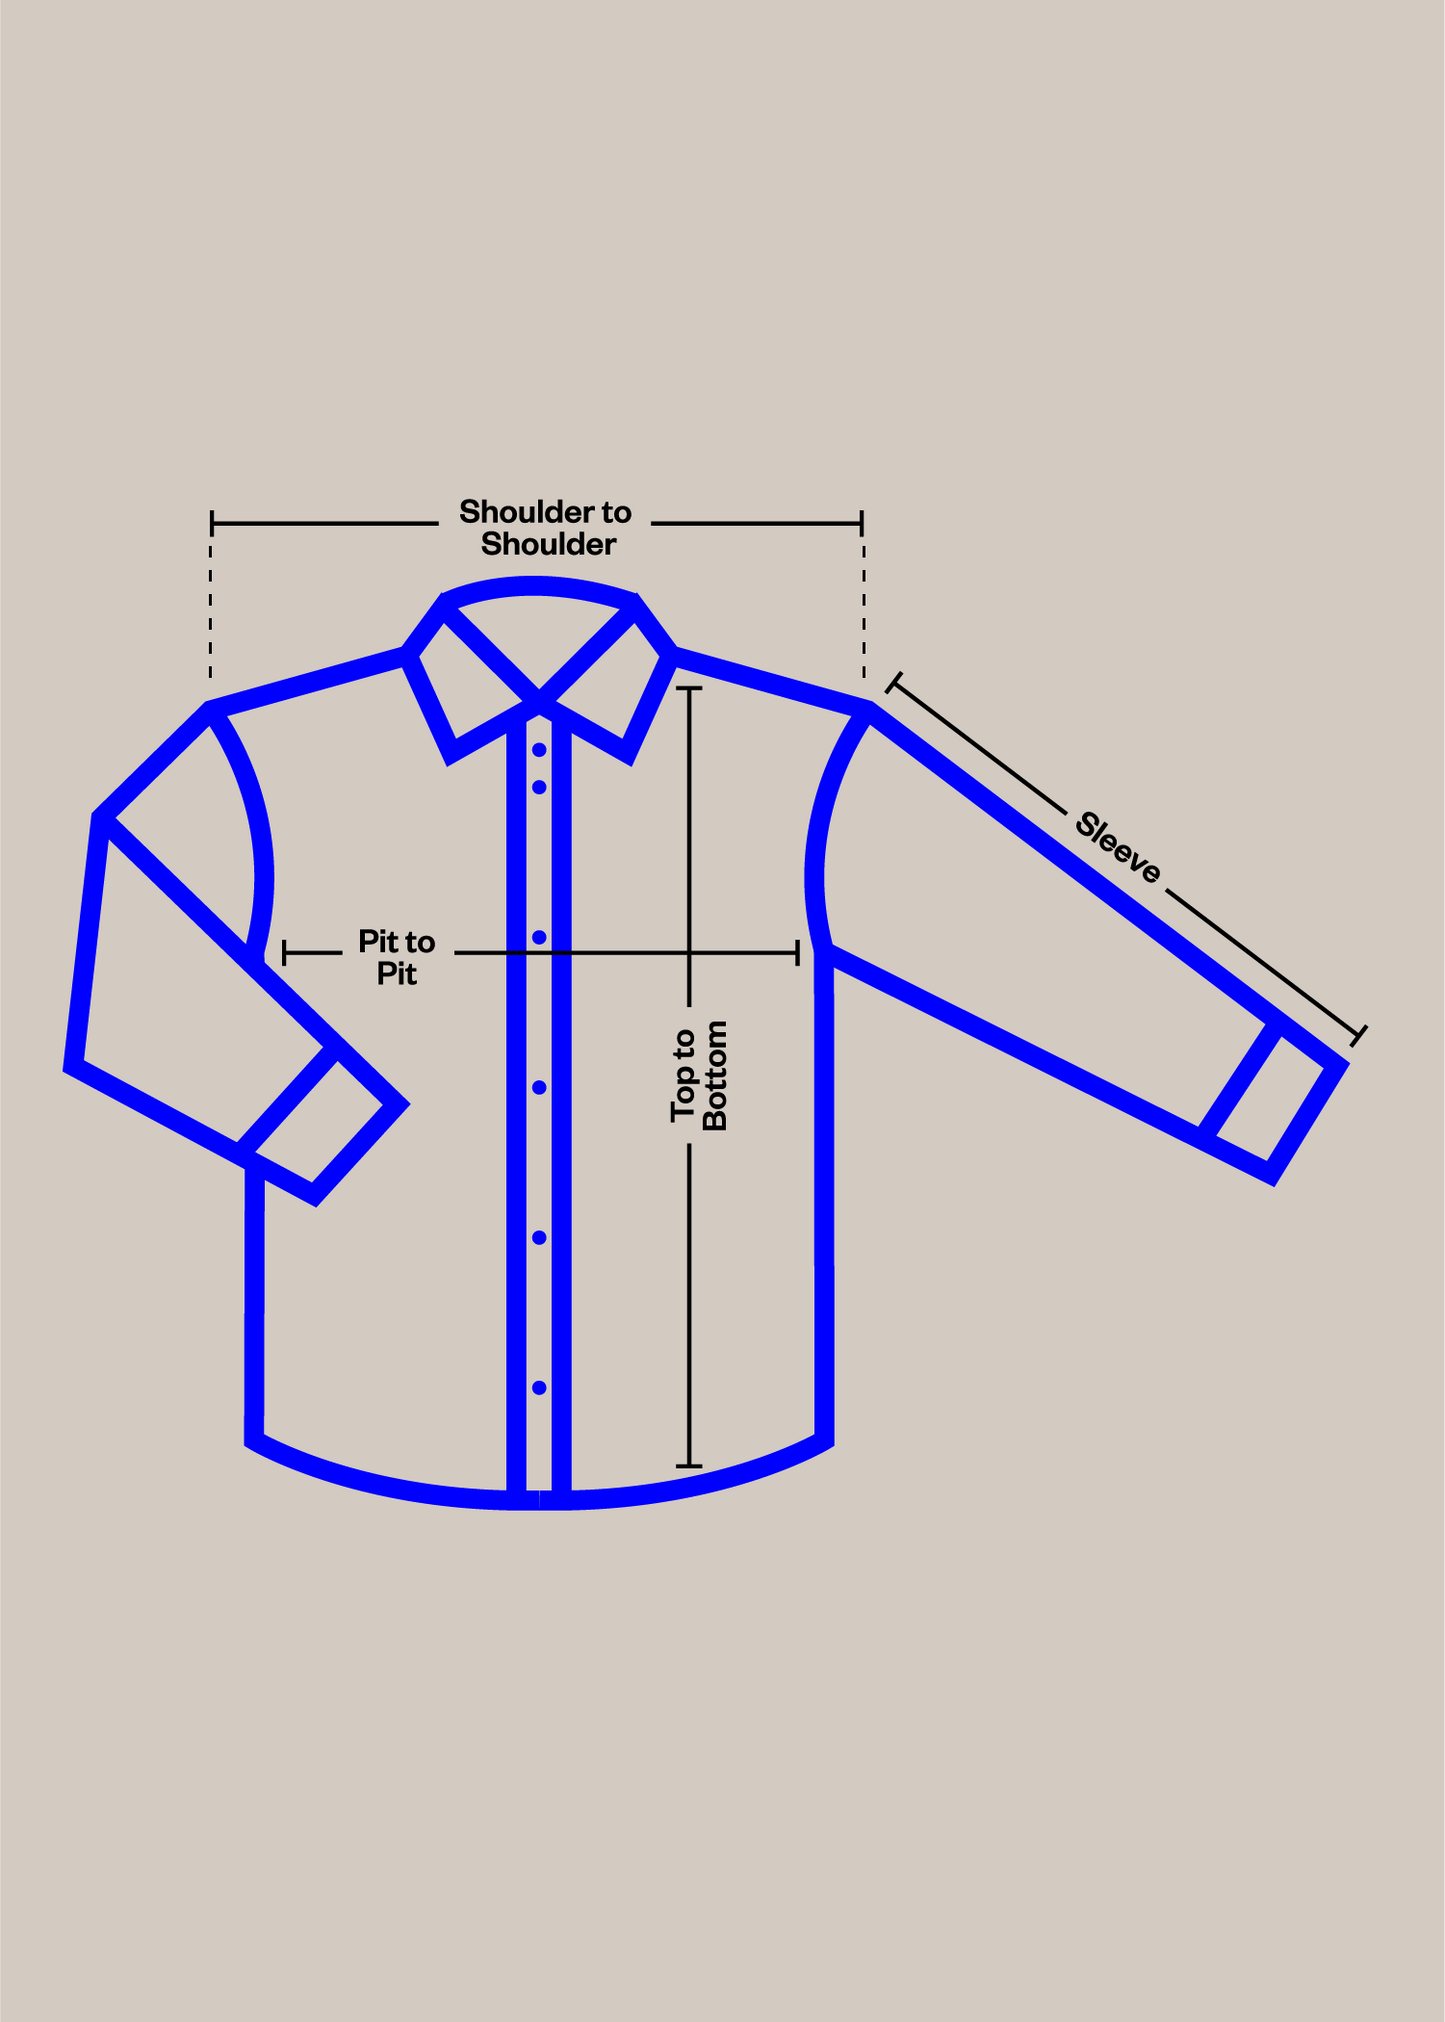 1980s Stabicott French Workwear Chore Jacket Size S/M